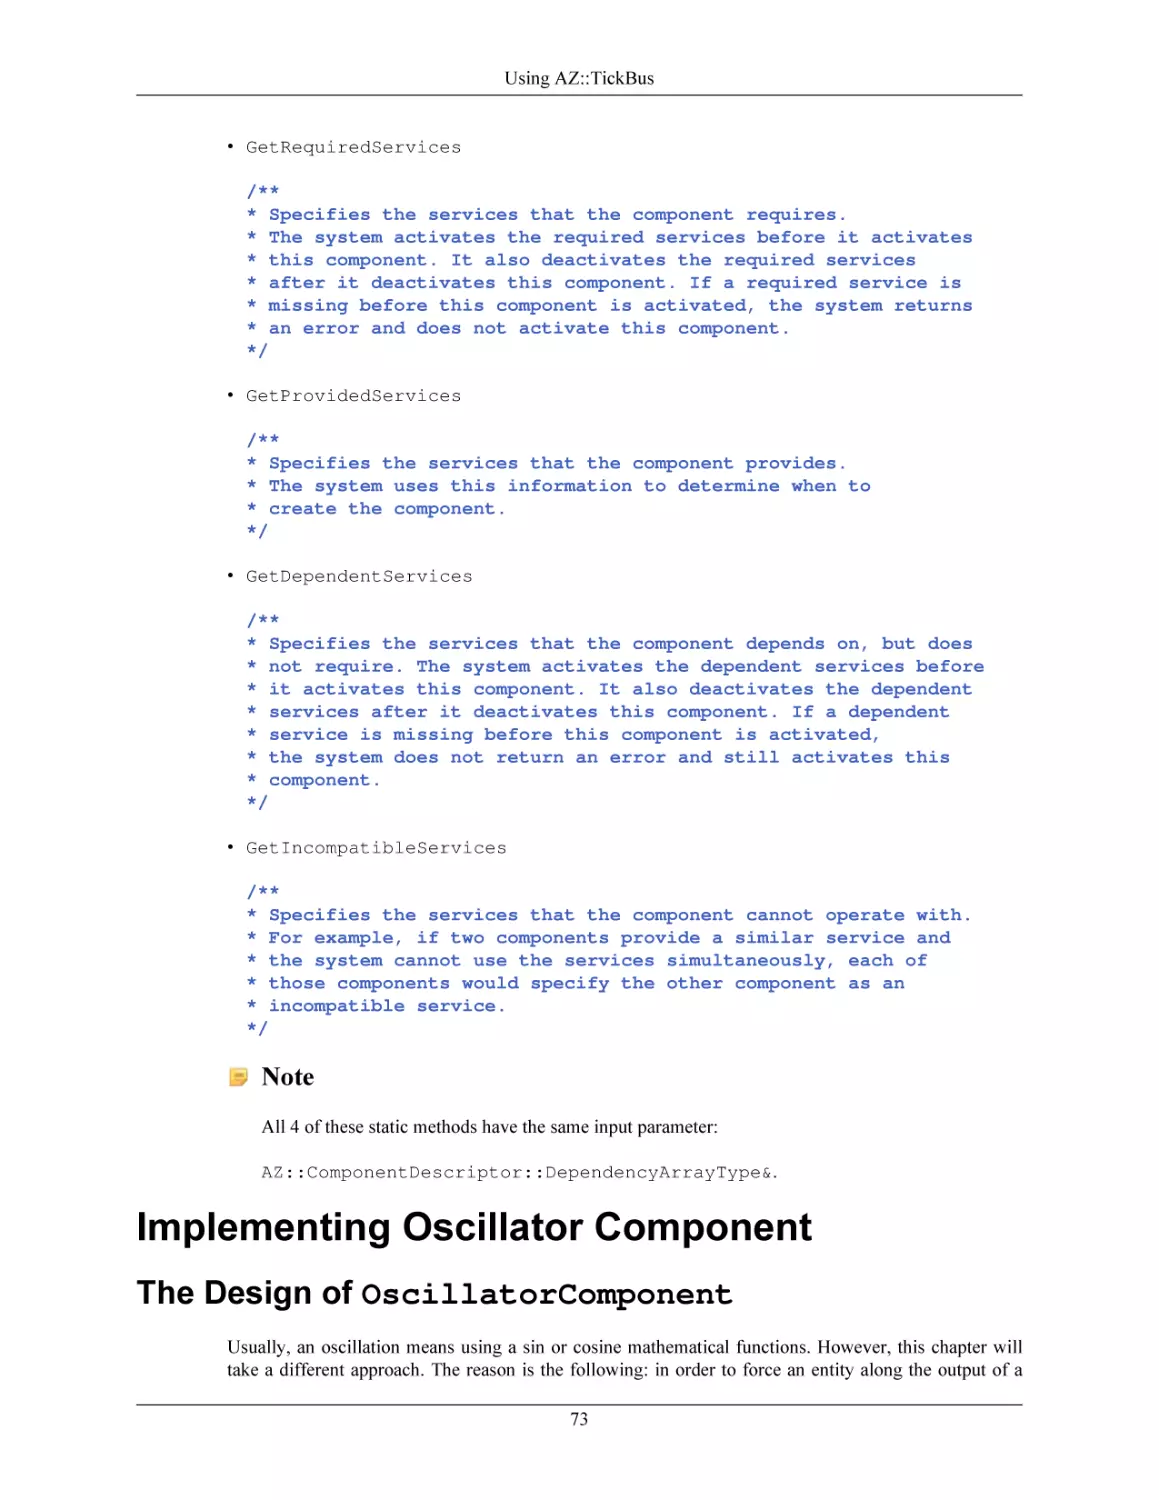 Implementing Oscillator Component
The Design of OscillatorComponent